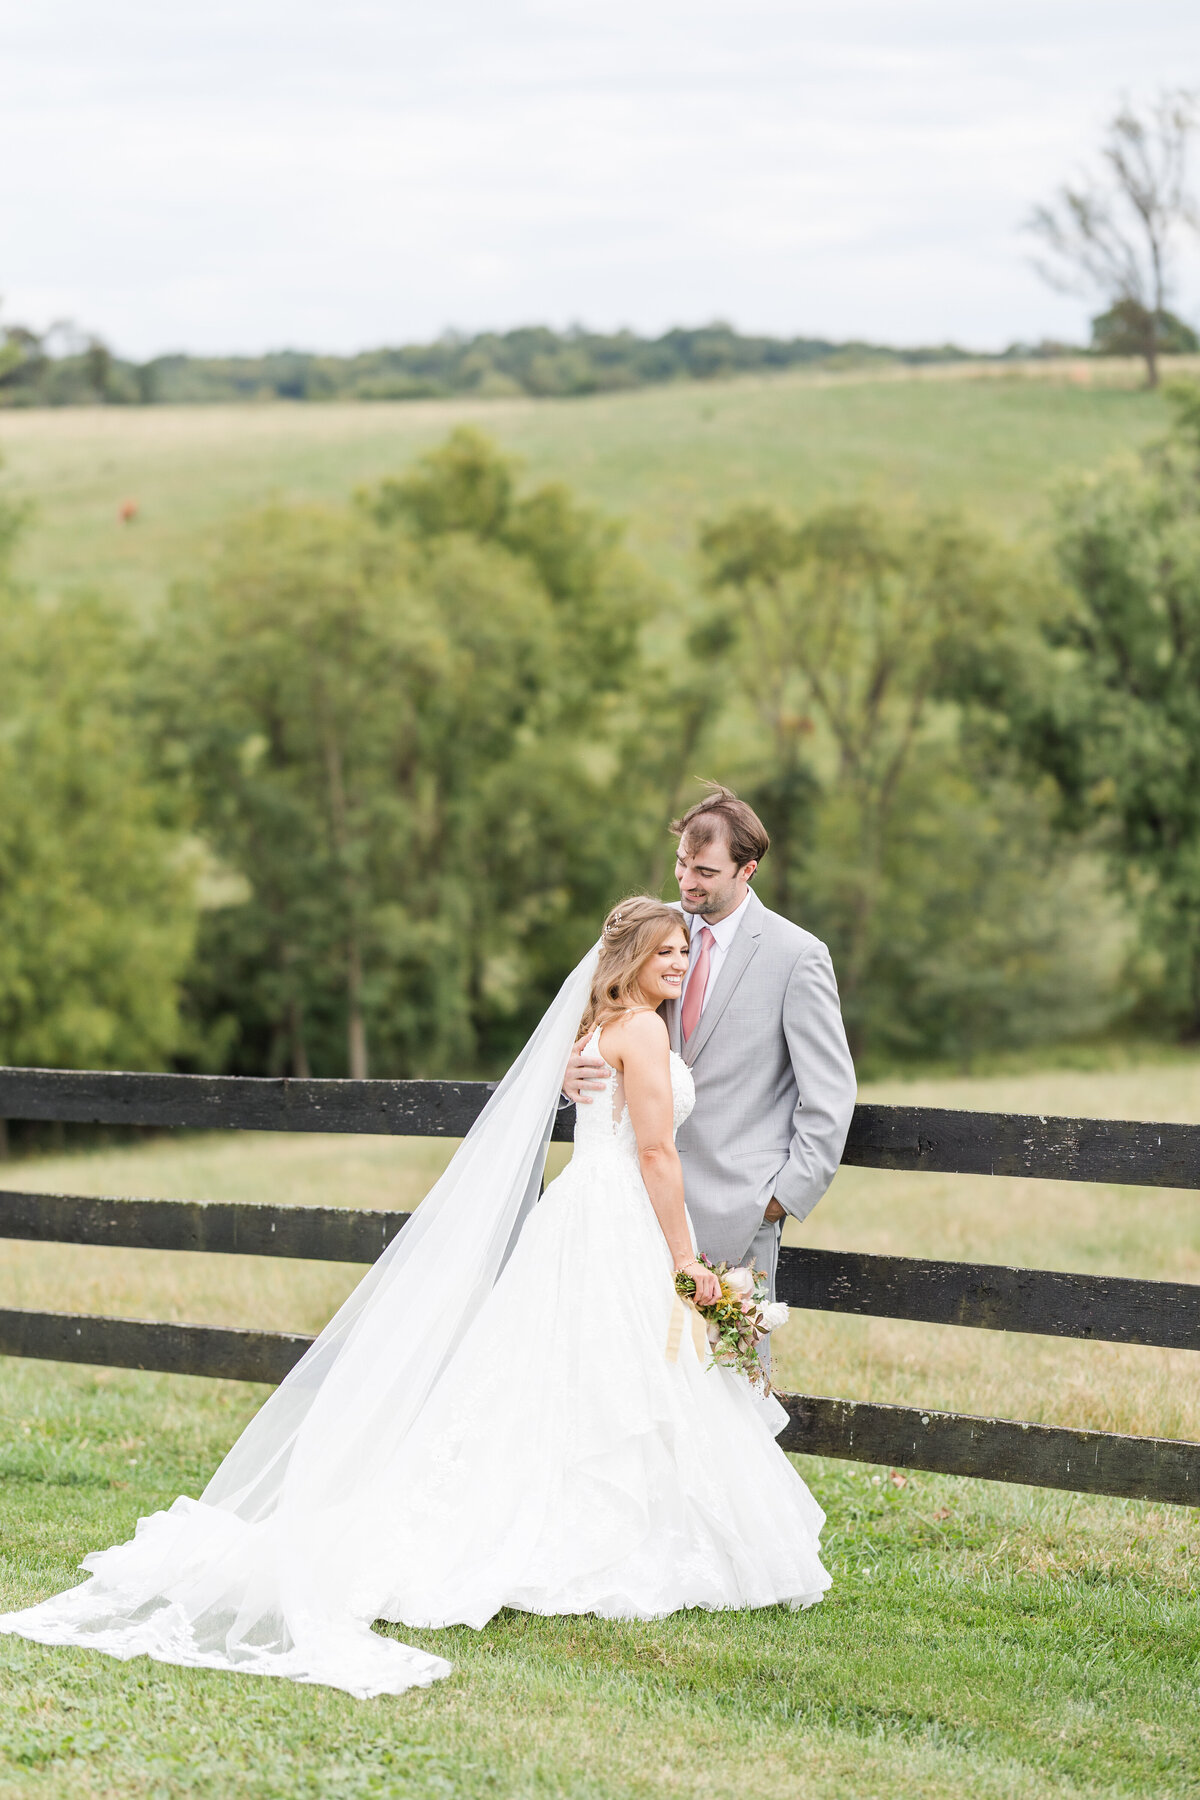 Kelsie & Marc Wedding - Taylor'd Southern Events - Maryland Wedding Photographer -28045